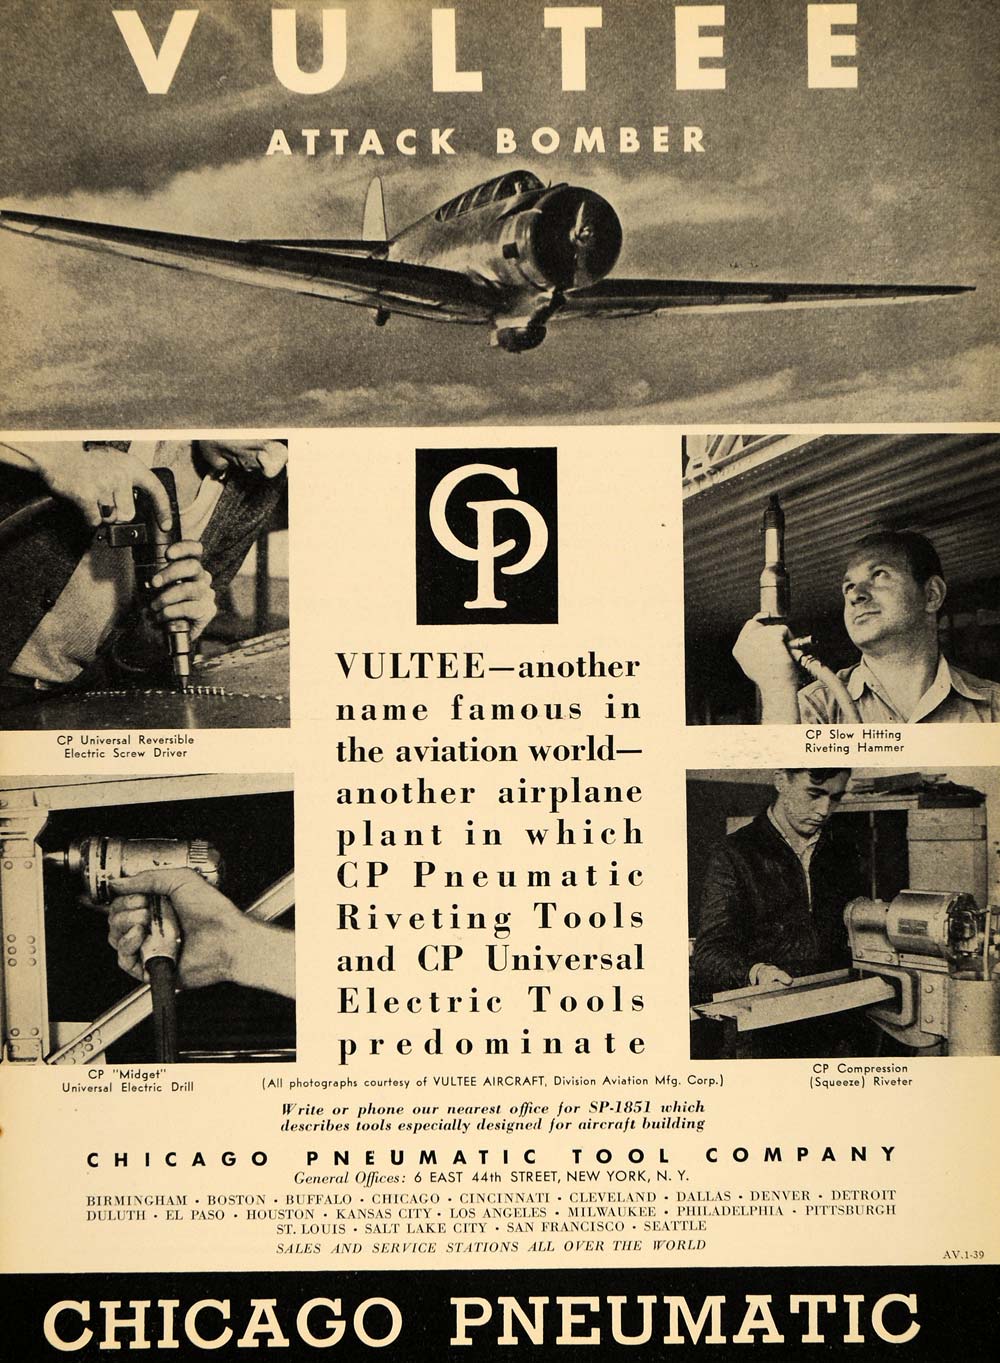 1939 Ad Vultee Attack Bomber Chicago Pneumatic Tools - ORIGINAL ADVERTISING FLY1